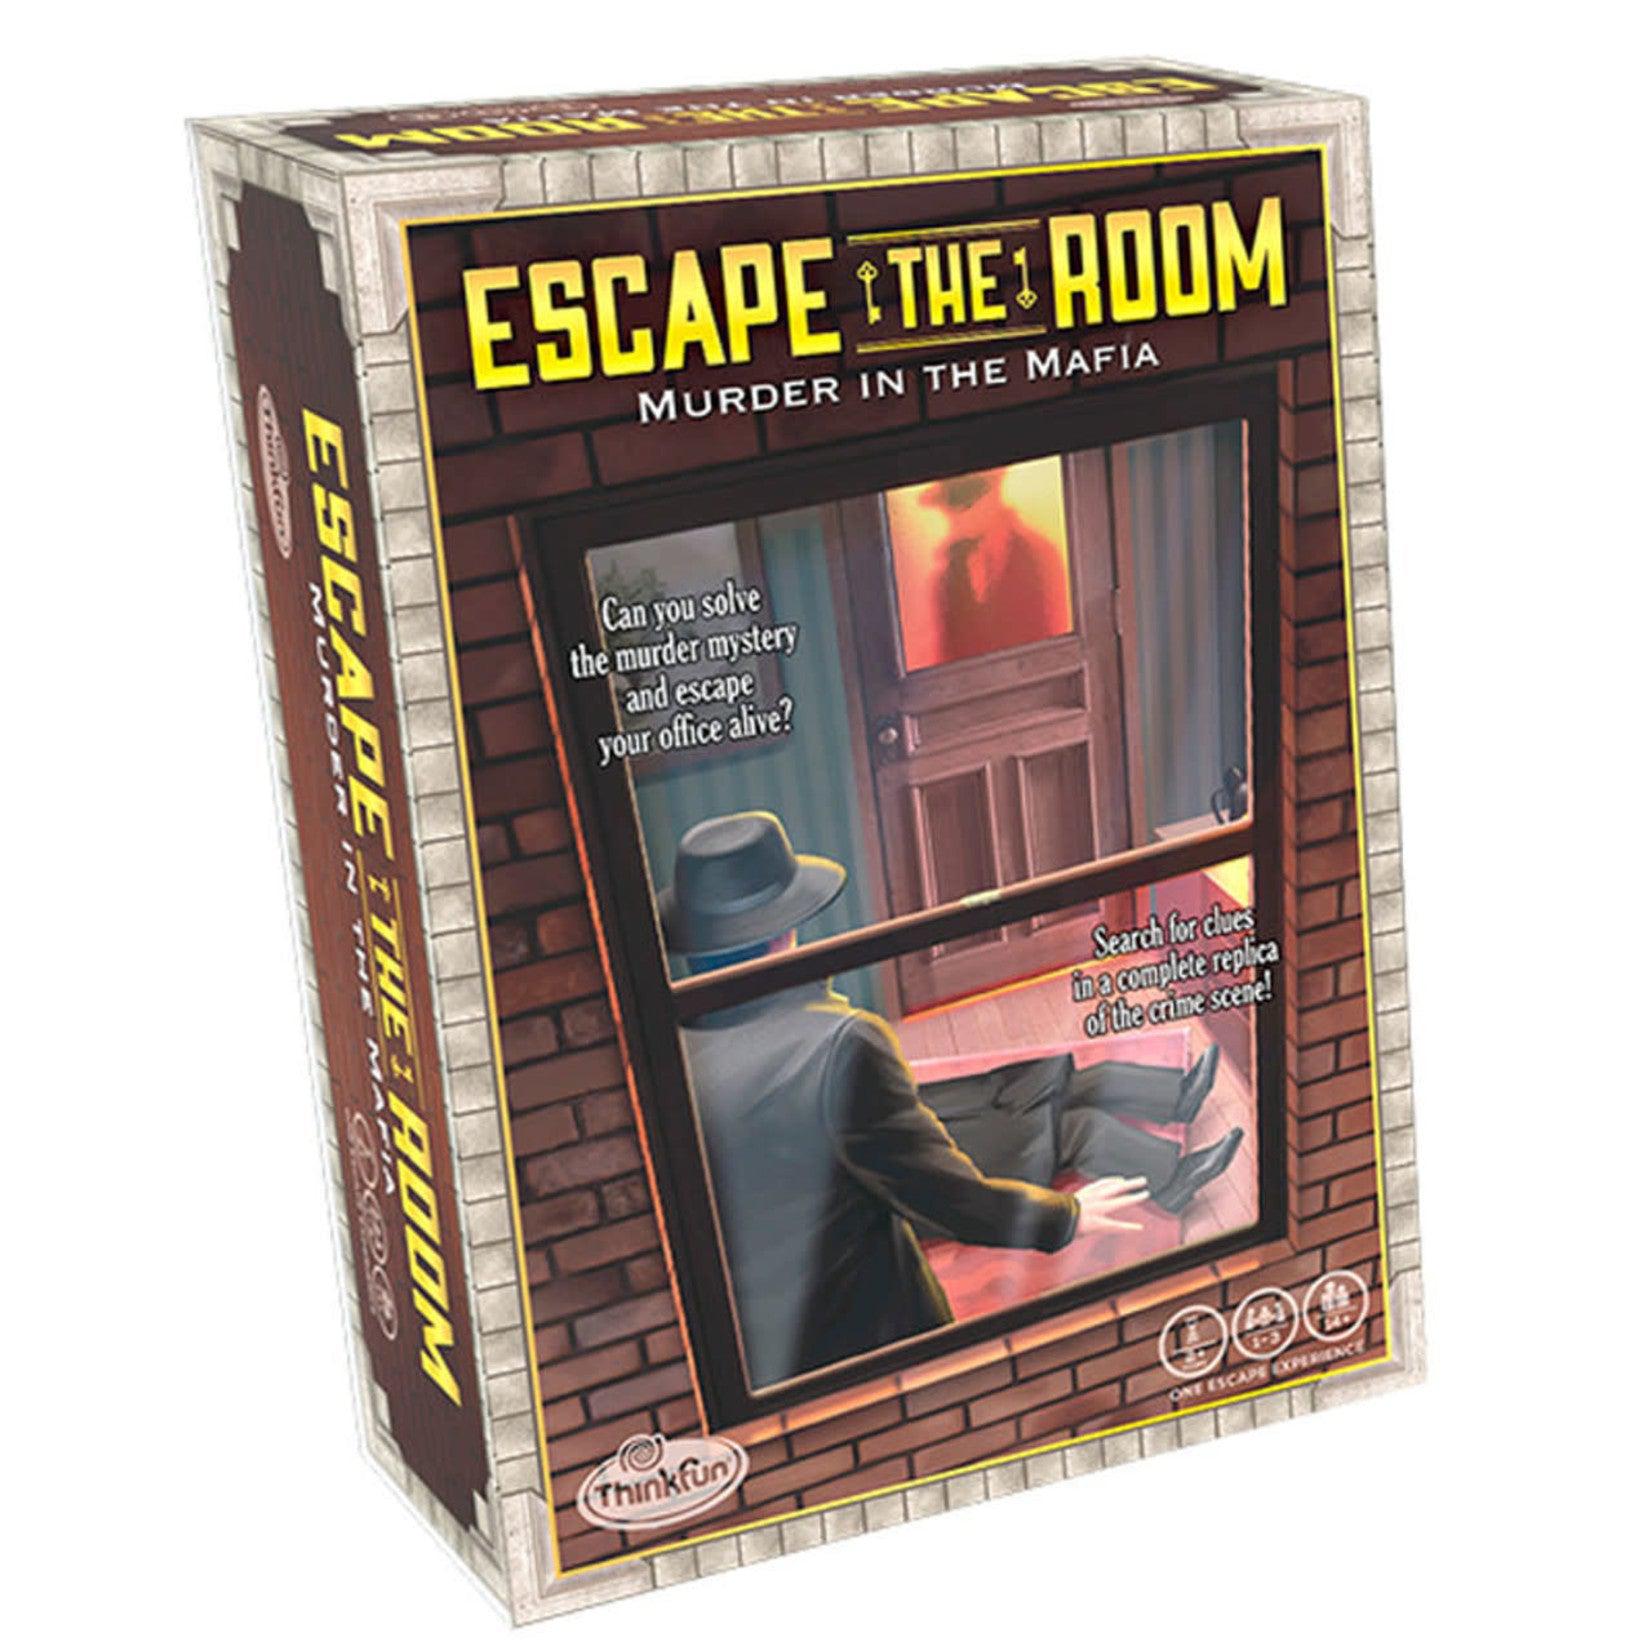 Escape The Room:The Cursed Dollhouse - ThinkFun